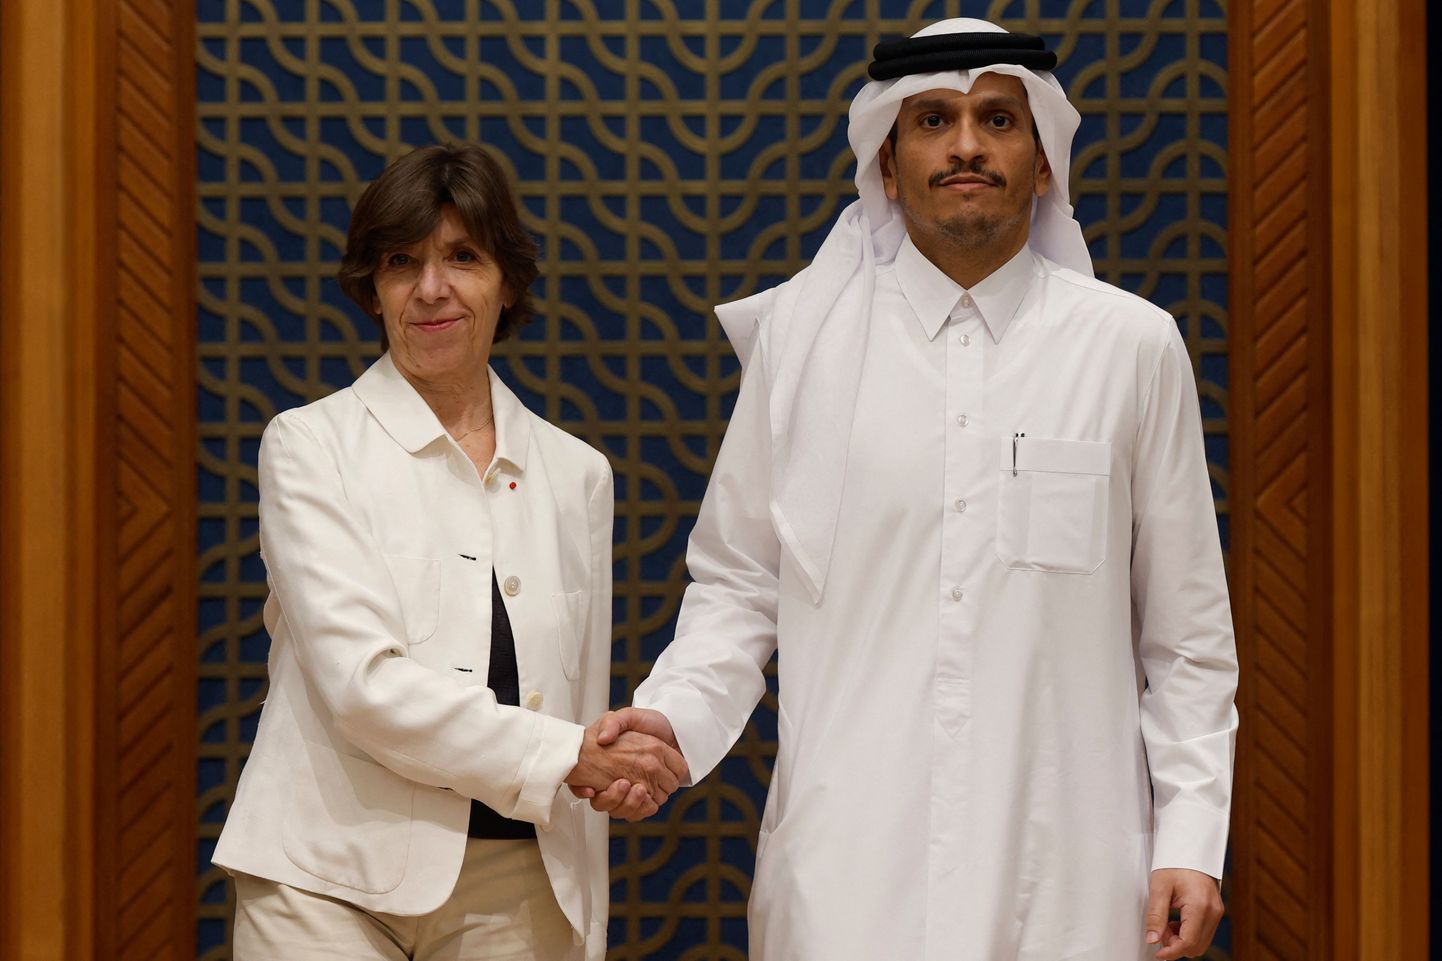 Prantsuse välisminister Catherine Colonna ja tema Katari kolleeg Mohammed bin Abdulrahman bin Jassim ath-Thani.